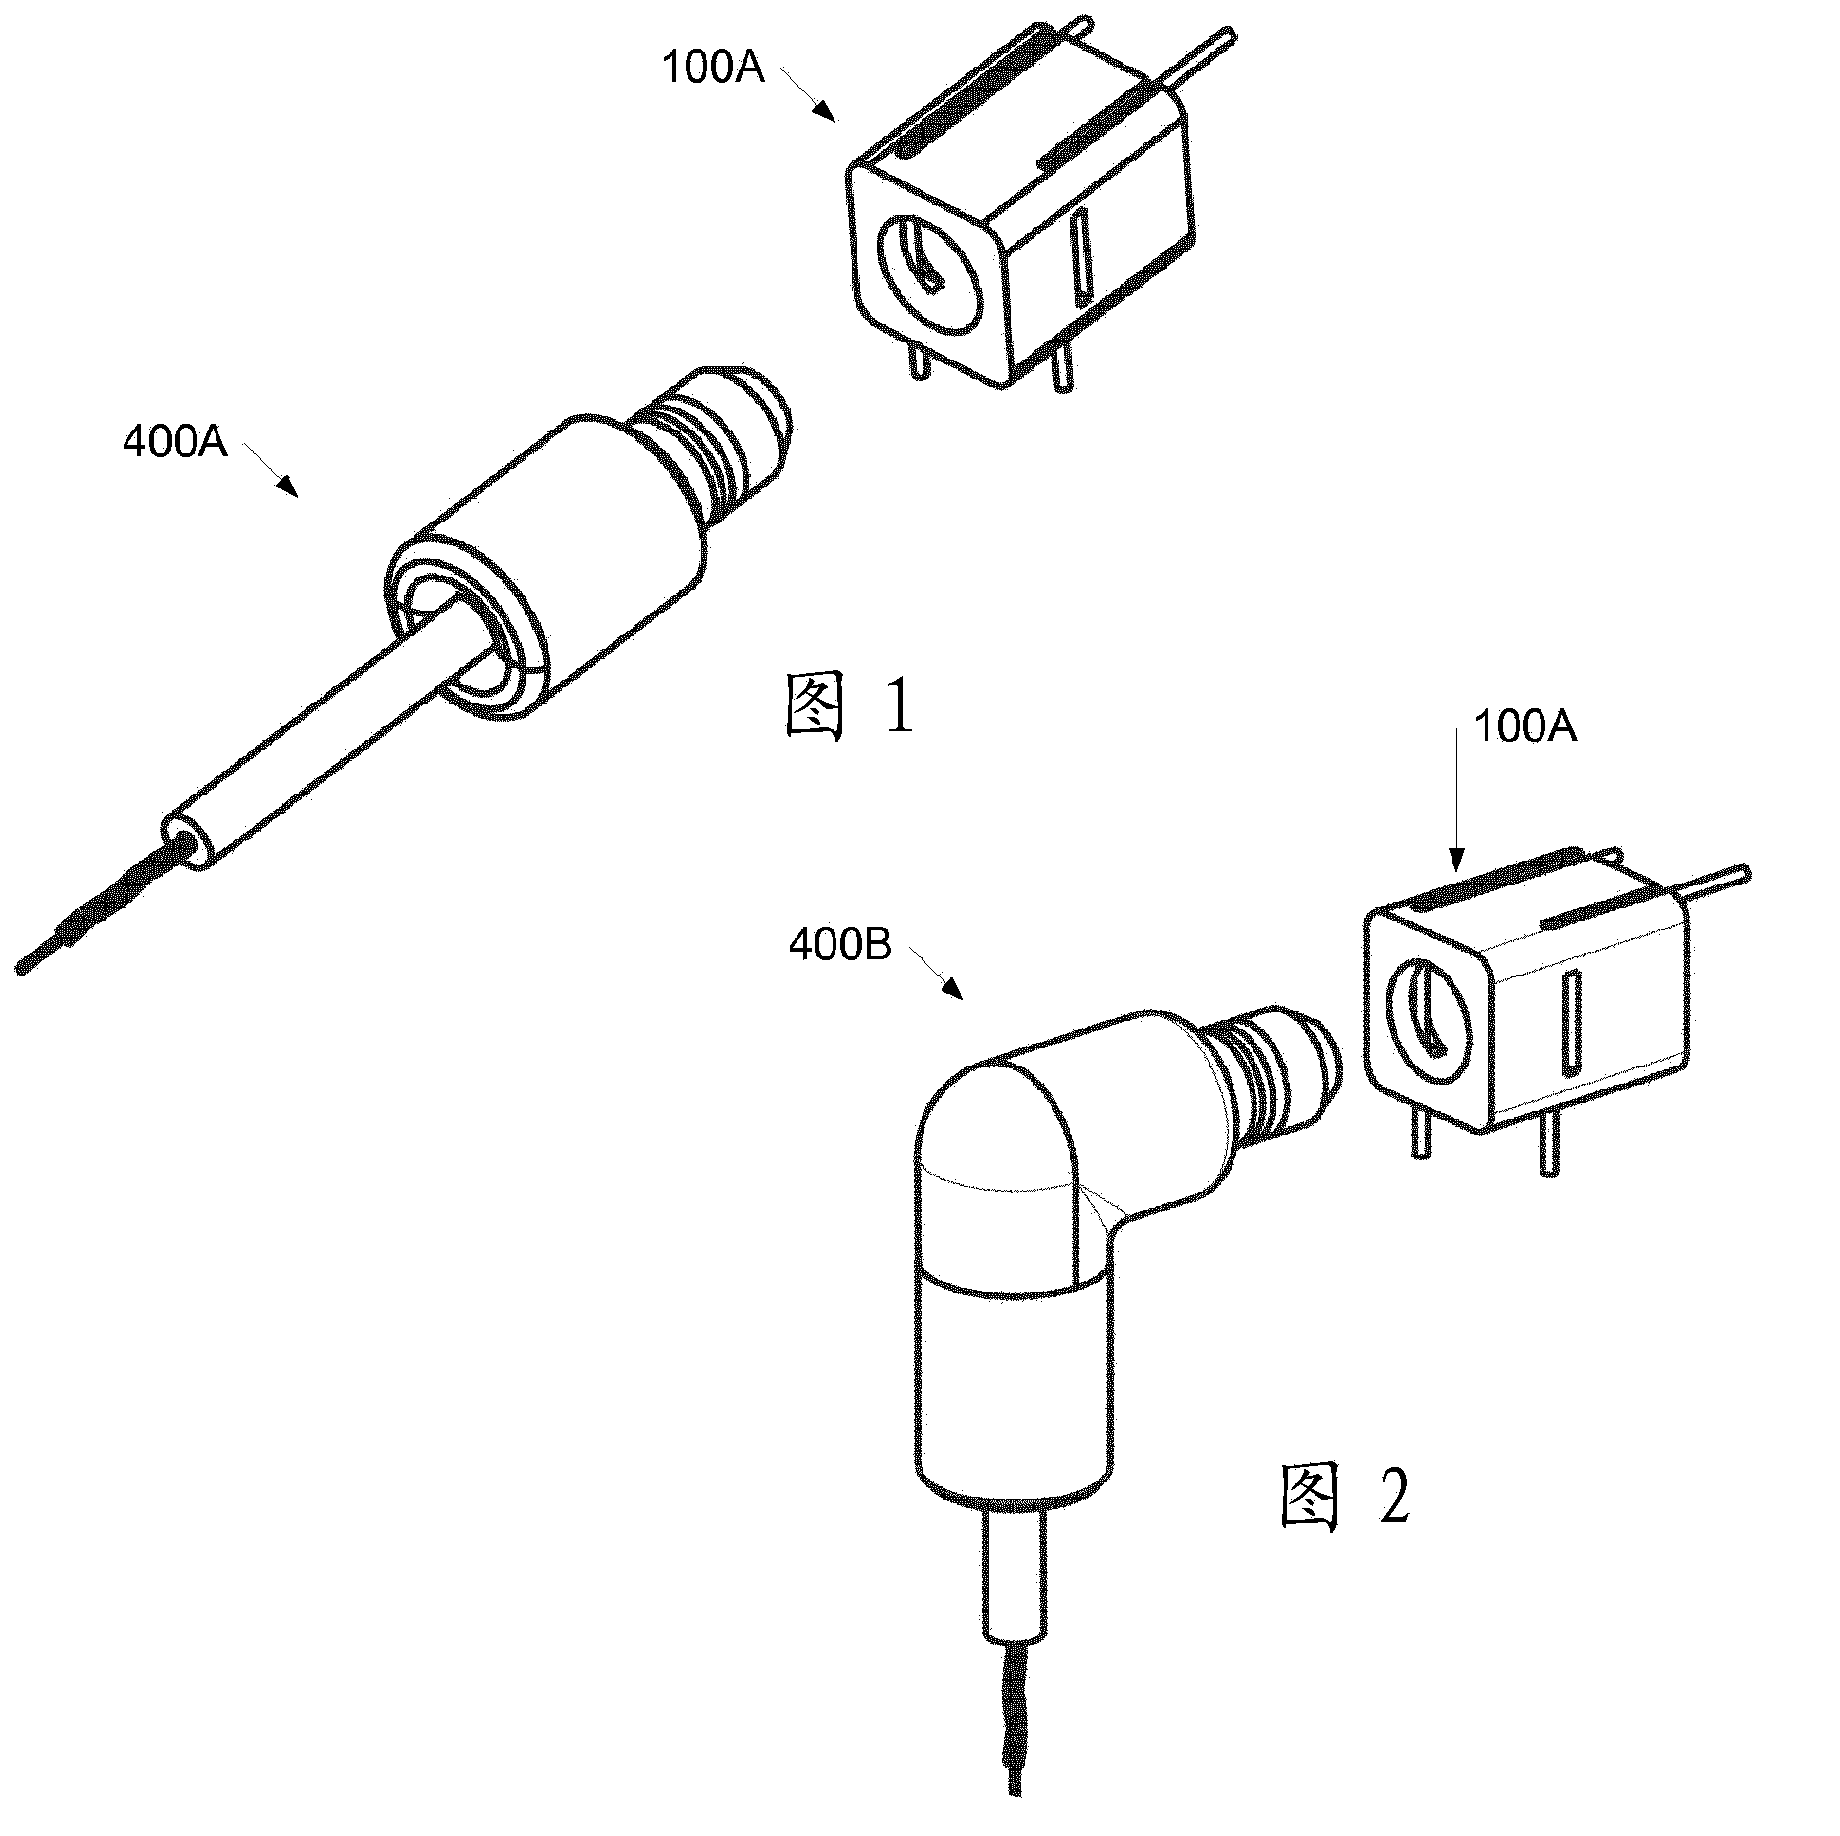 Miniaturized connector